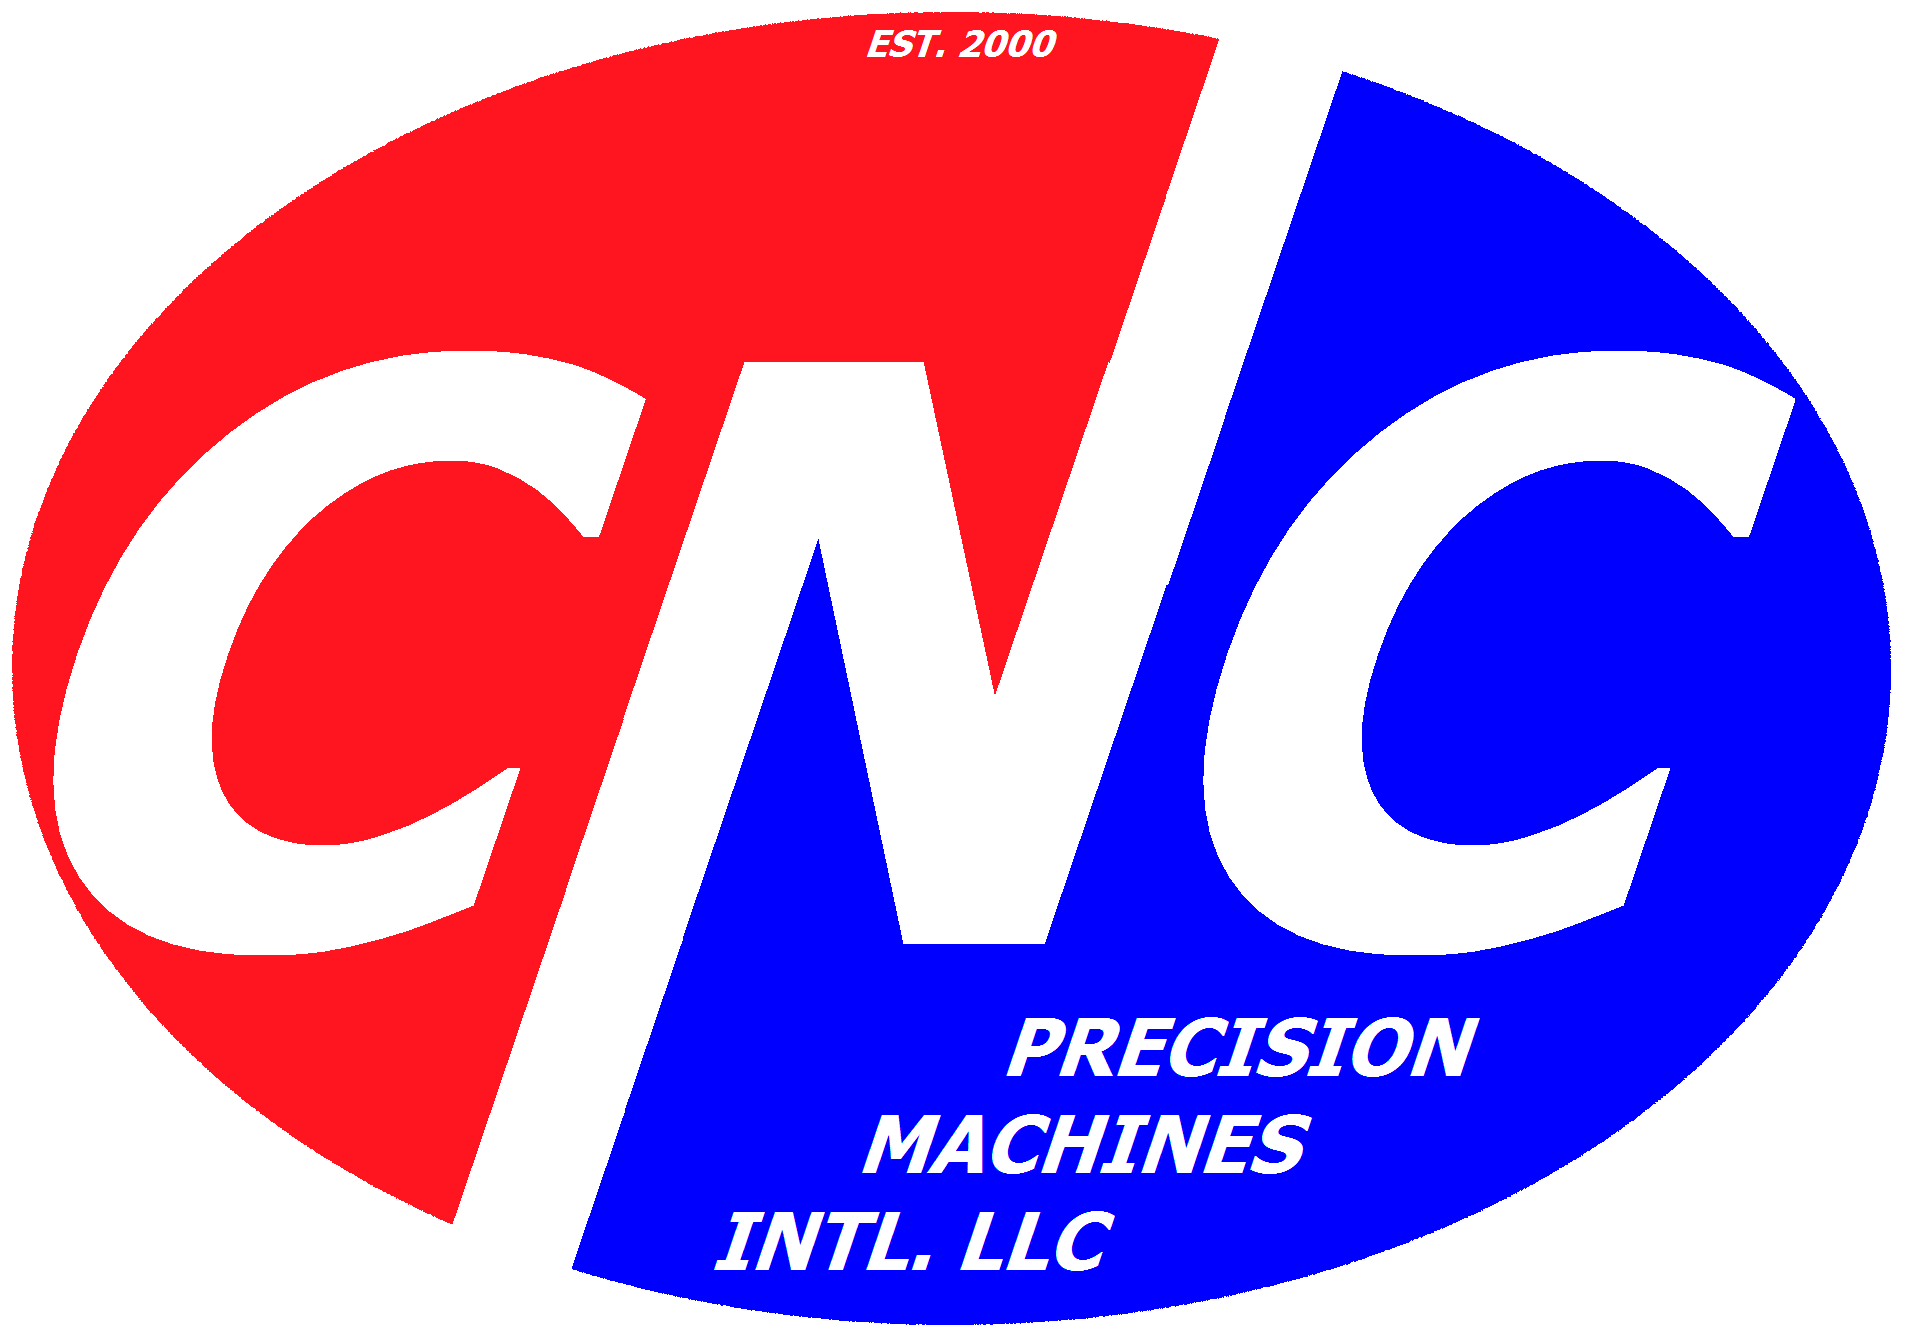 CNC Precision Machines Int. LLC